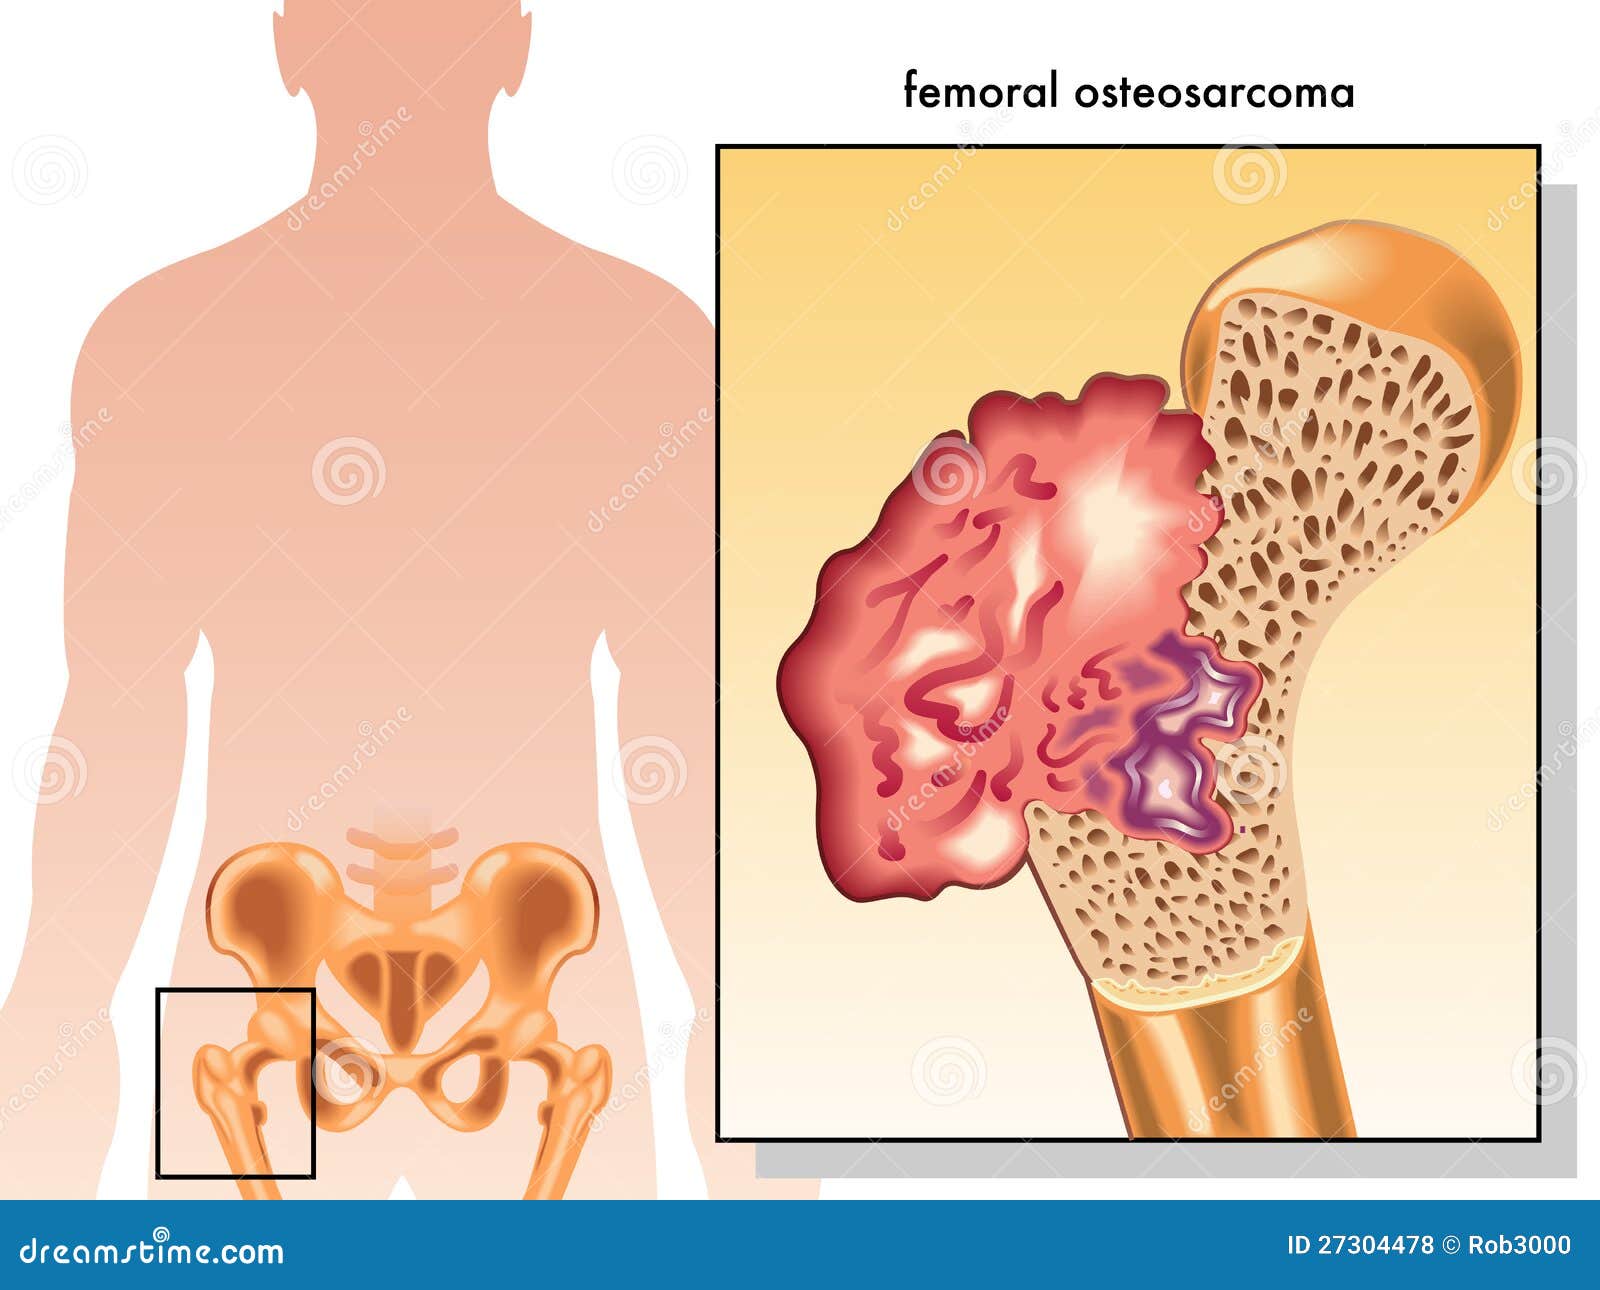 femoral osteosarcoma